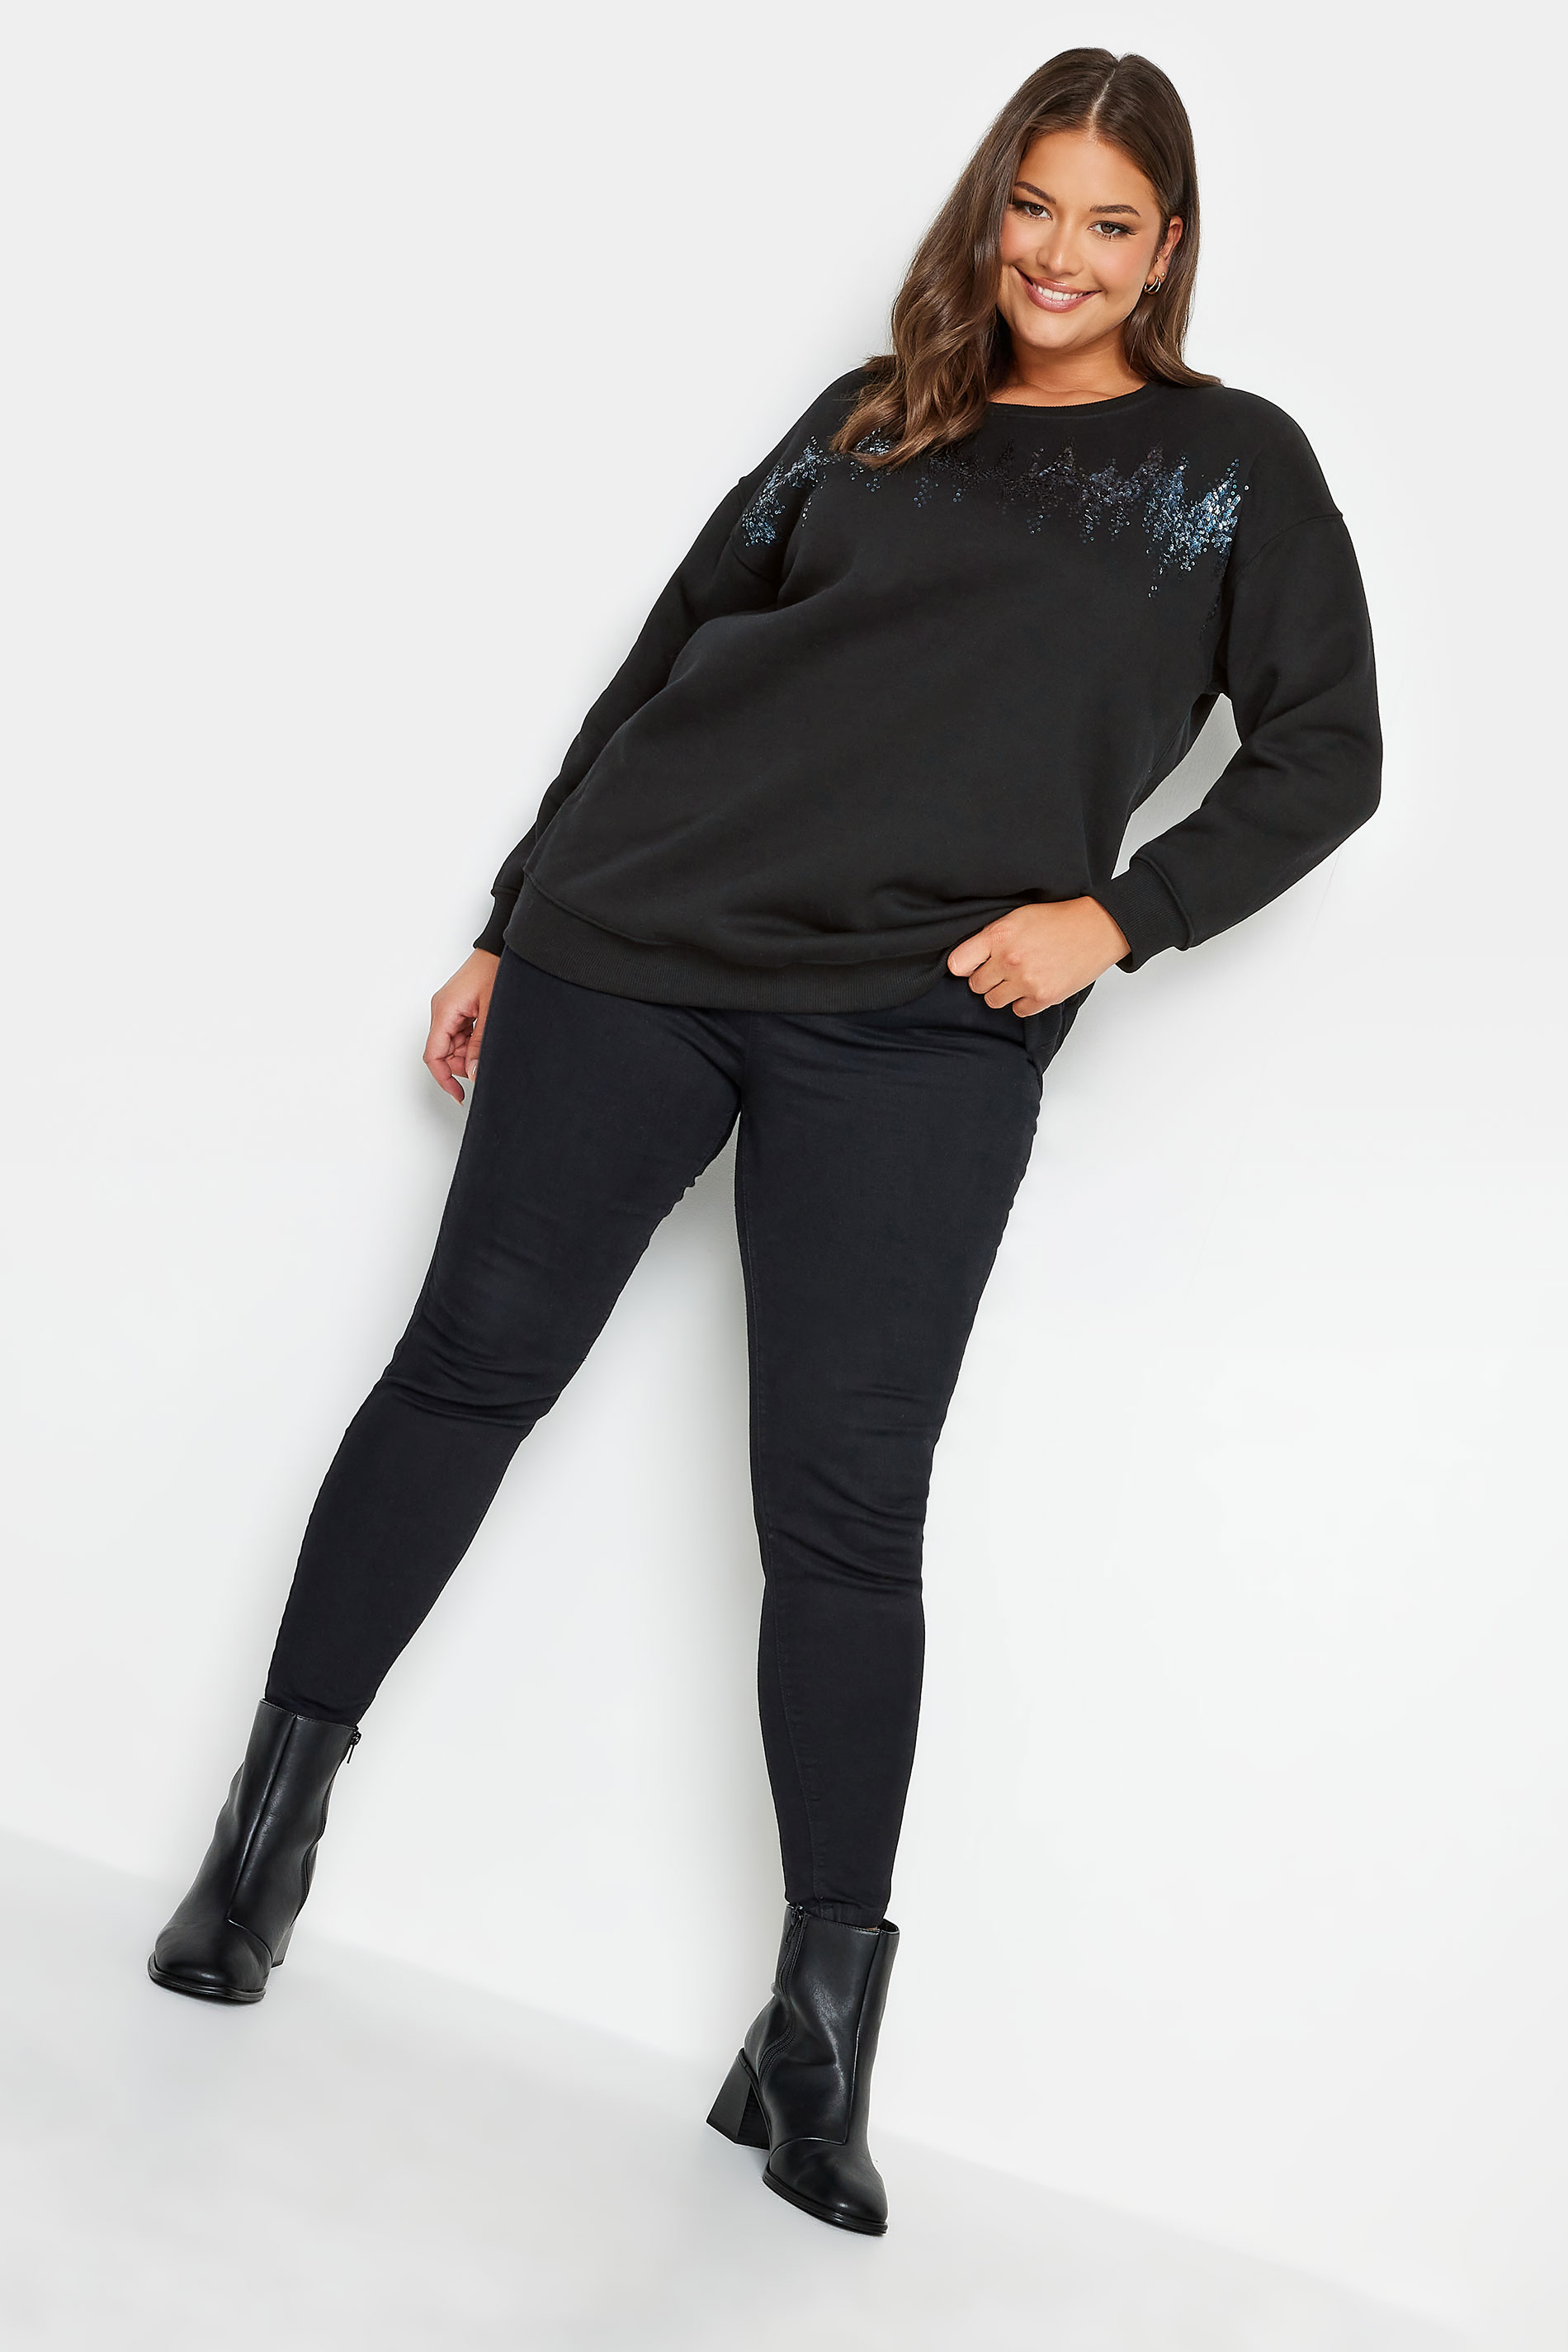 YOURS LUXURY Plus Size Black Zig Zag Sequin Embellished Sweatshirt | Yours Clothing 2